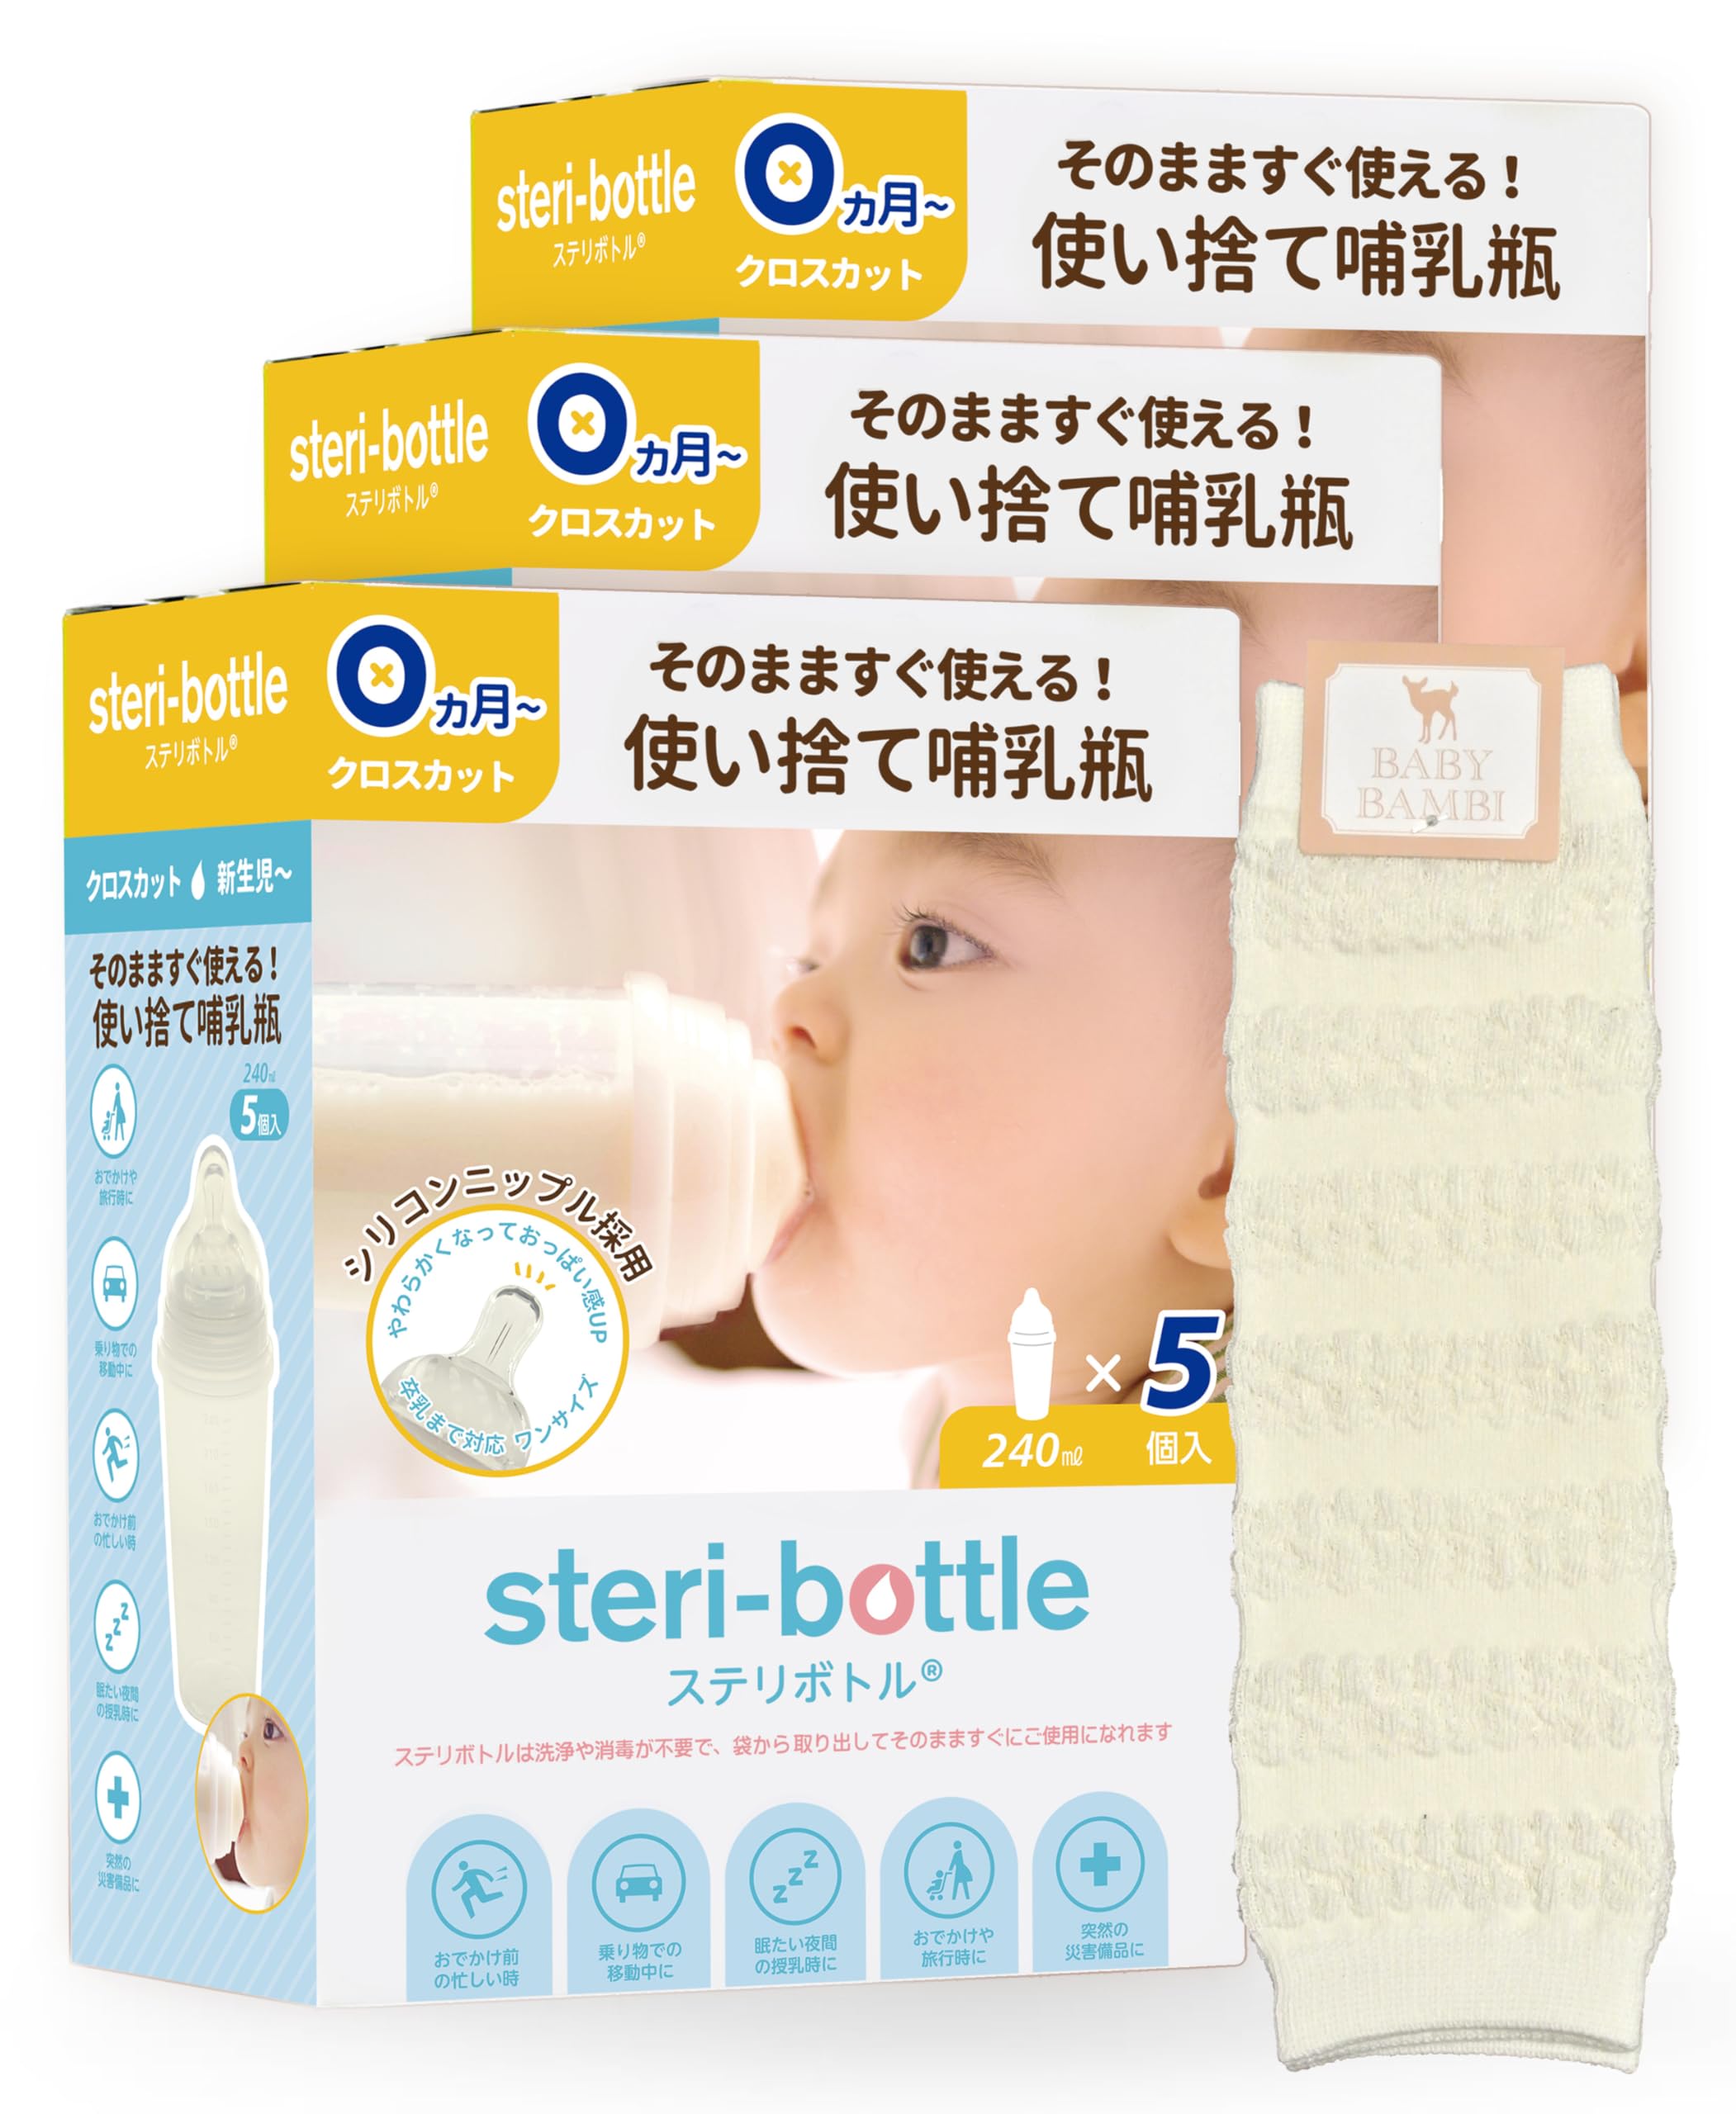 Clovis Baby(クロビスベビー) ステリボトル 消毒不要使い捨て哺乳瓶(240ml)5個入り3箱 日本正規品 & 美人家オリジナル ベビー用 レ